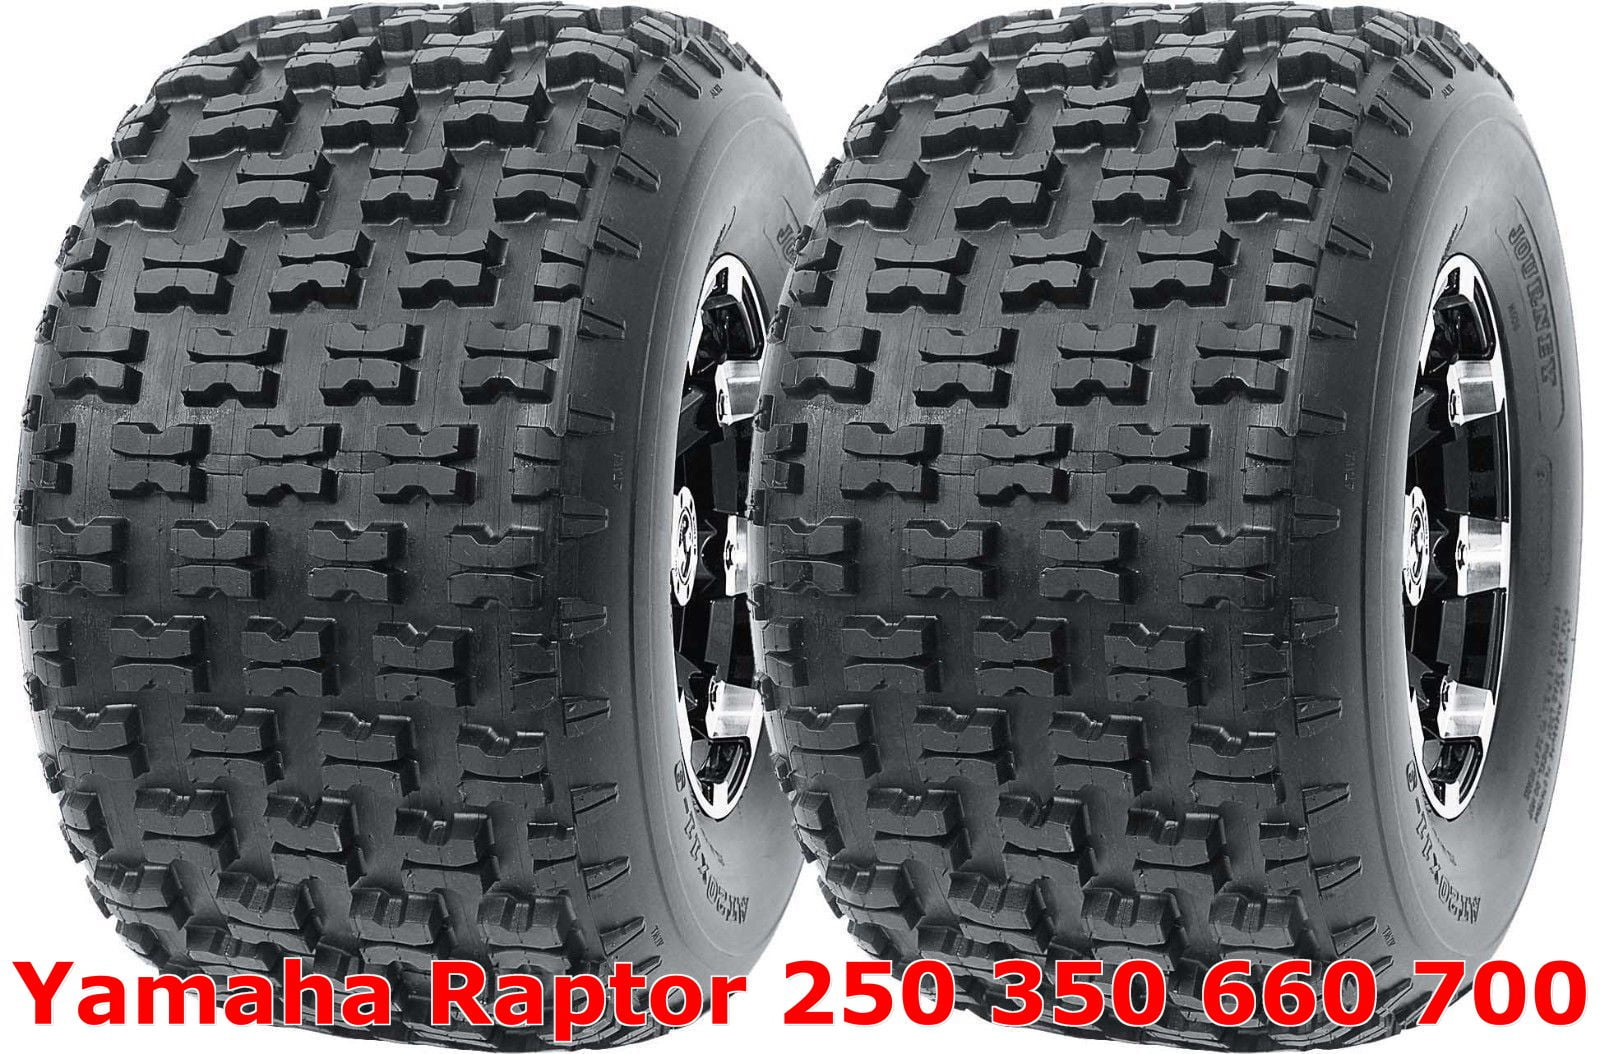 Set of 2 Front 22x7-10 MASSFX ATV Sport Quad Tires Two Front 22x7-10 4 Ply Tires For Yamaha Raptor Banshee Honda 400ex 450r 660 700 400 450 350 250 